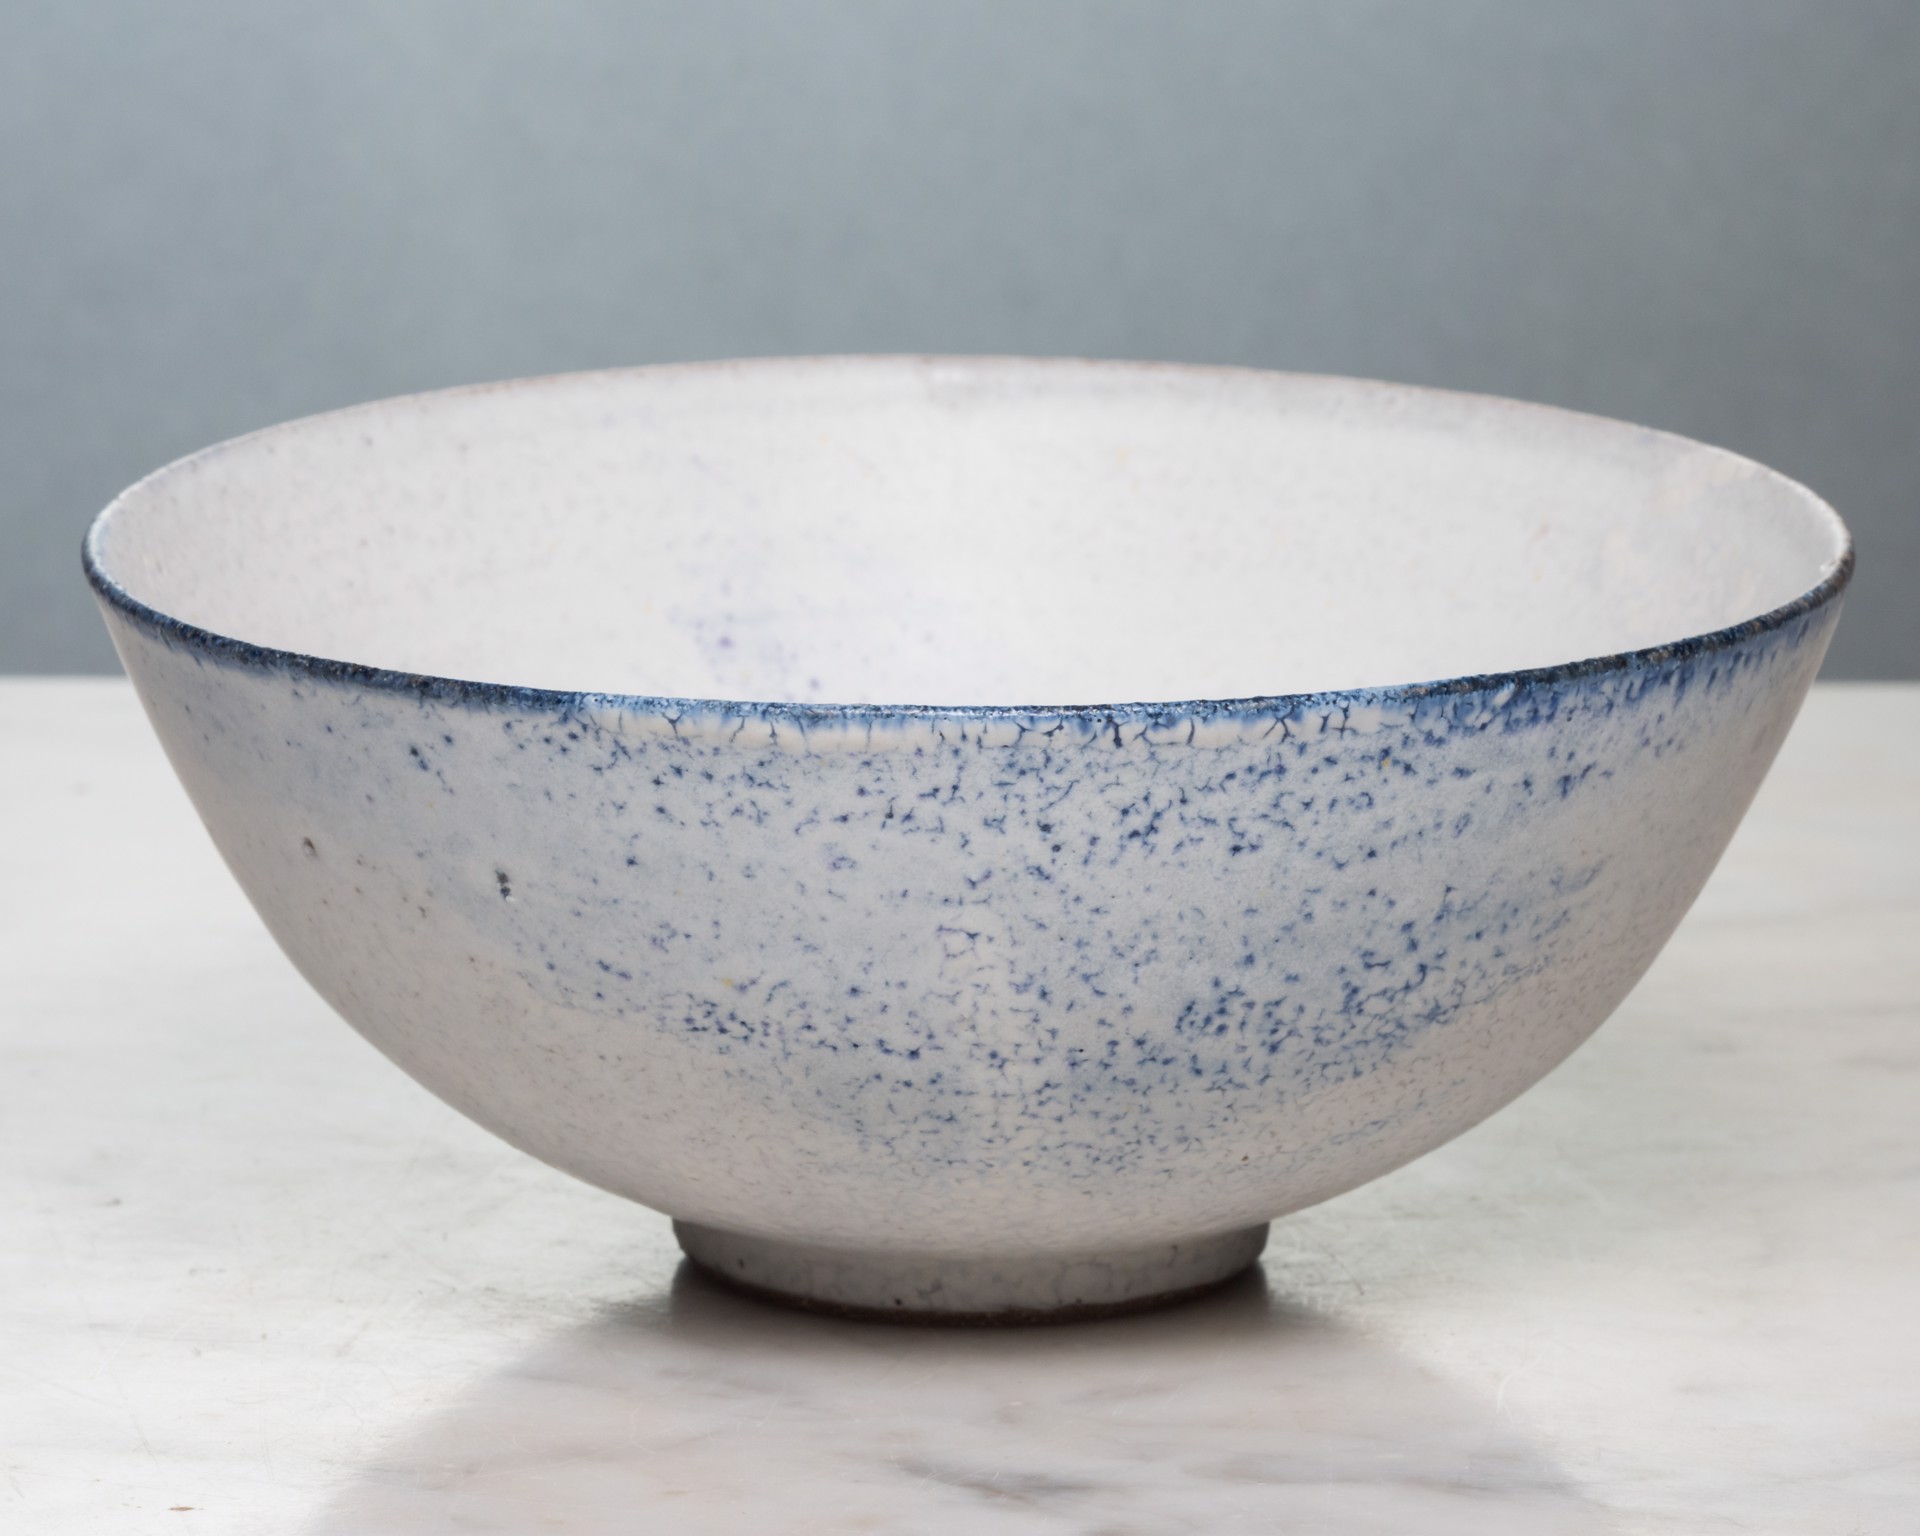 Broken Blue Bowl by Franny Owen